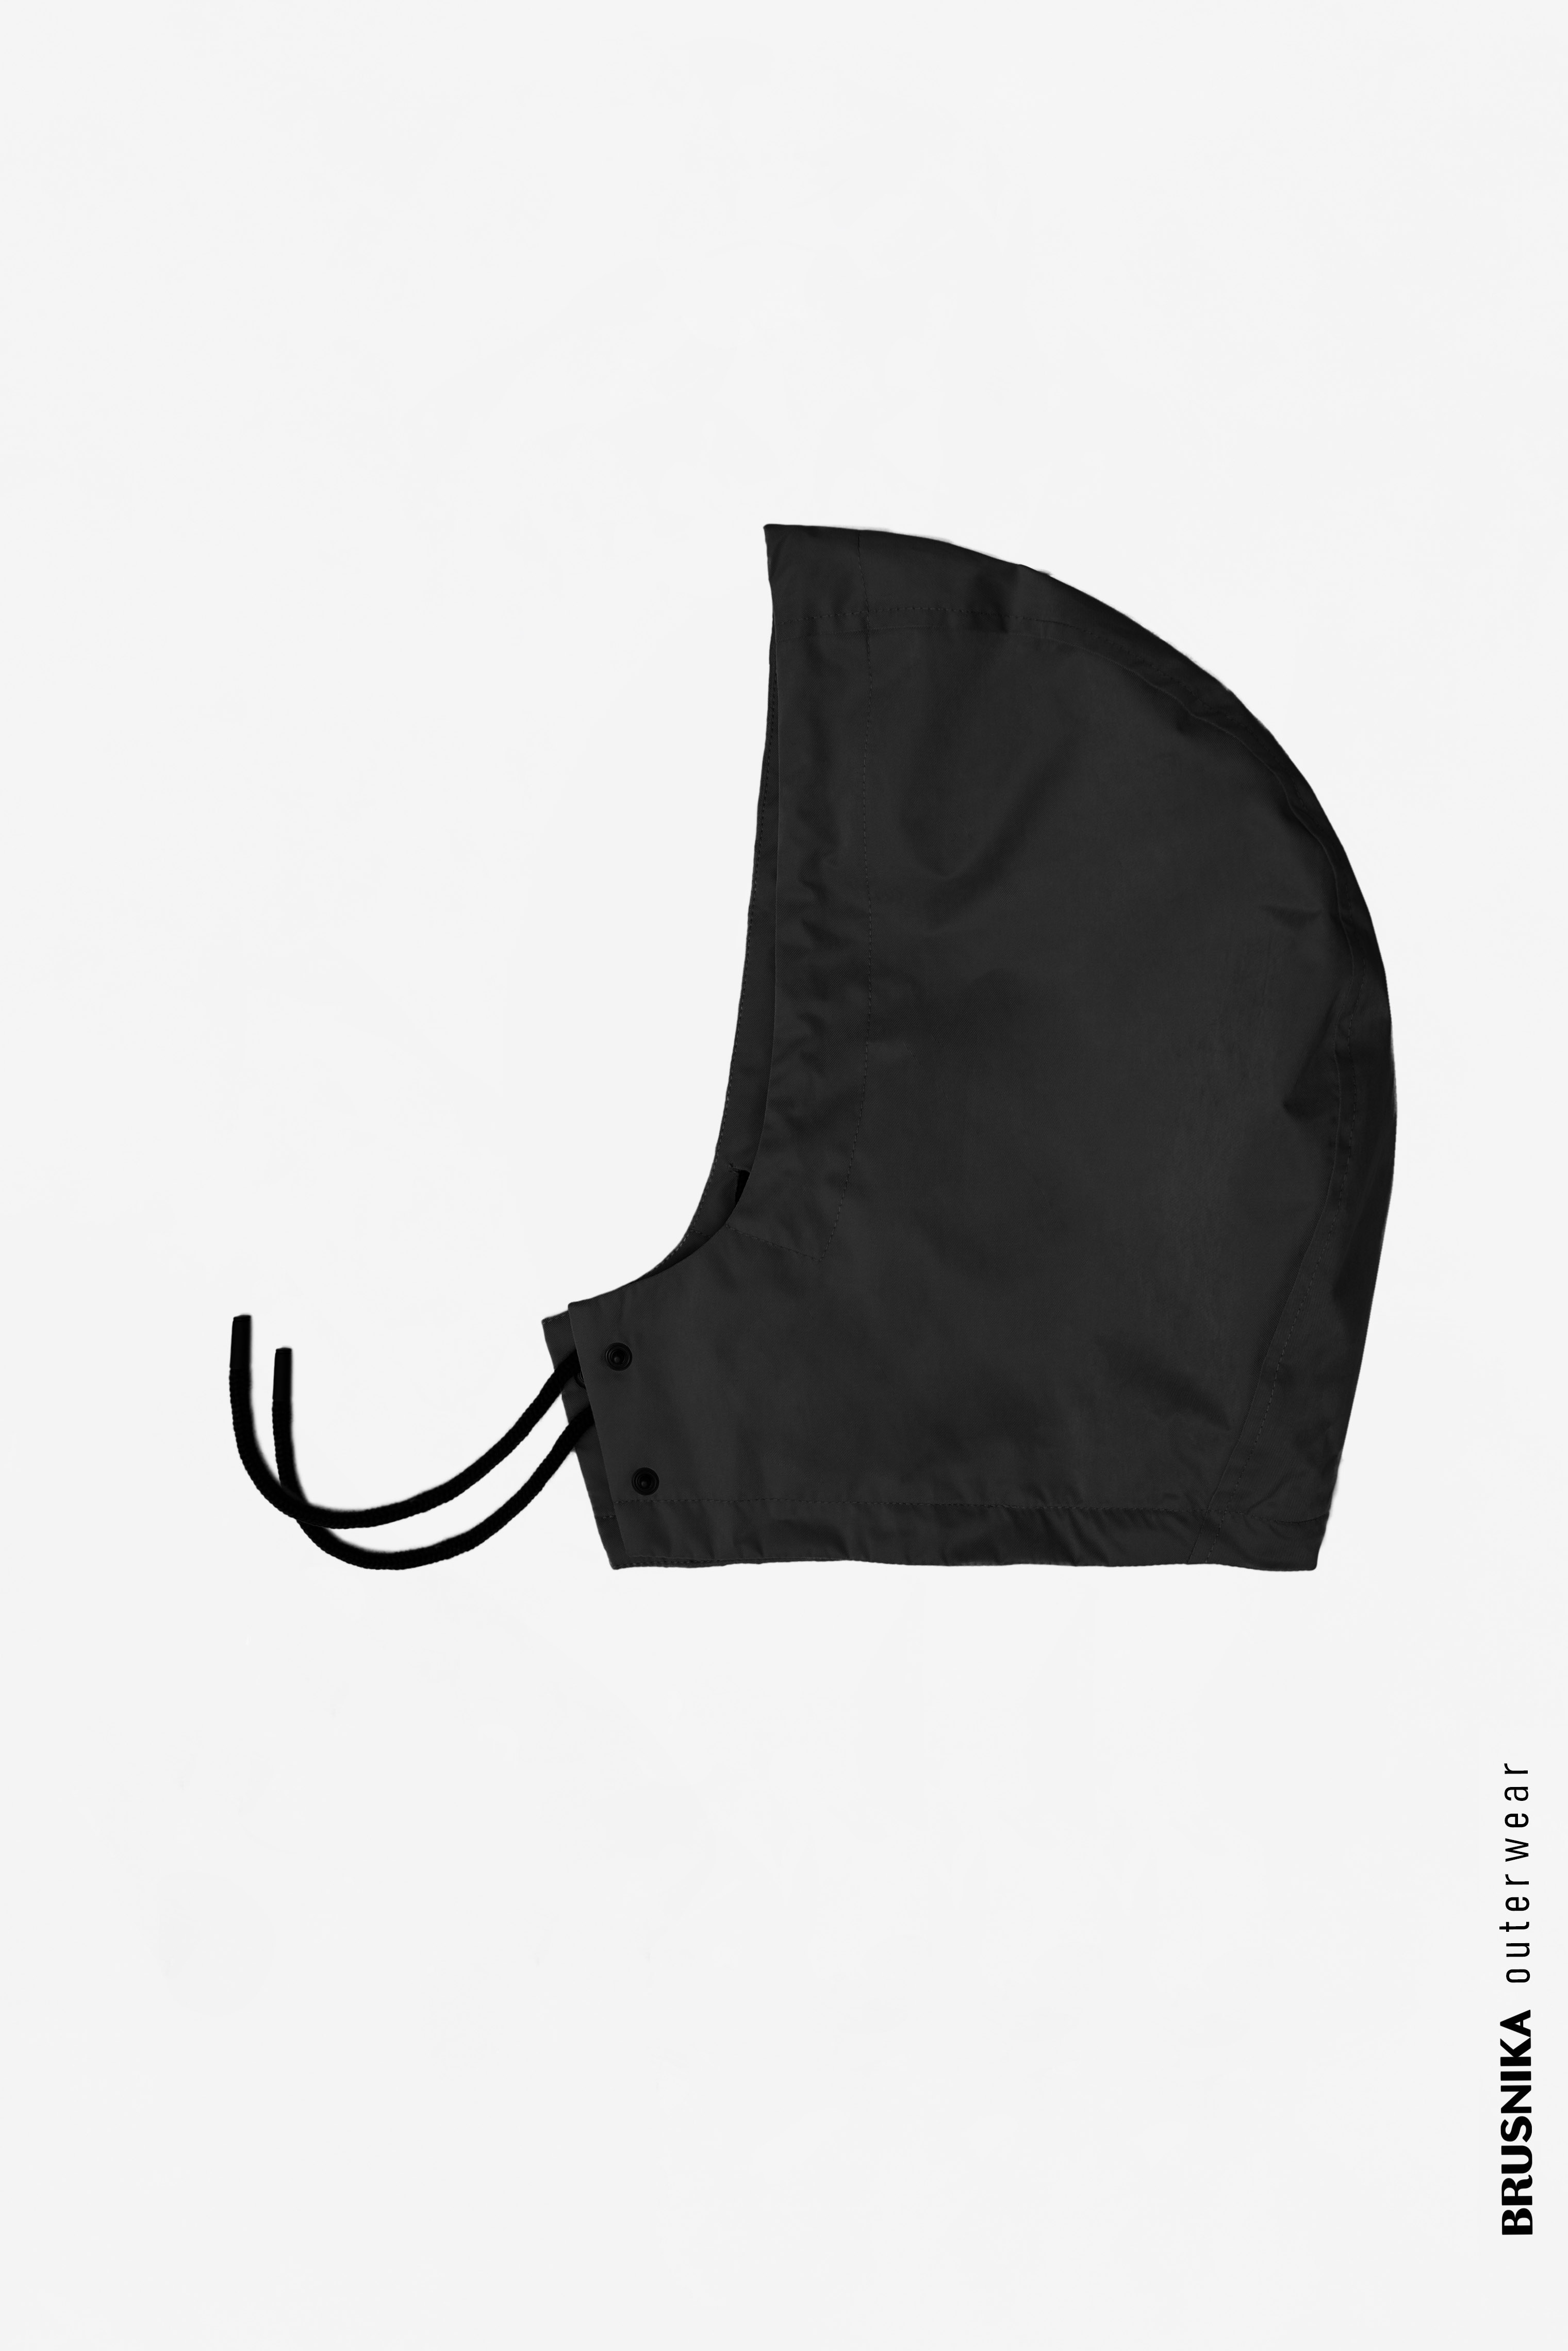 Cloak 4204-01 Black from BRUSNiKA